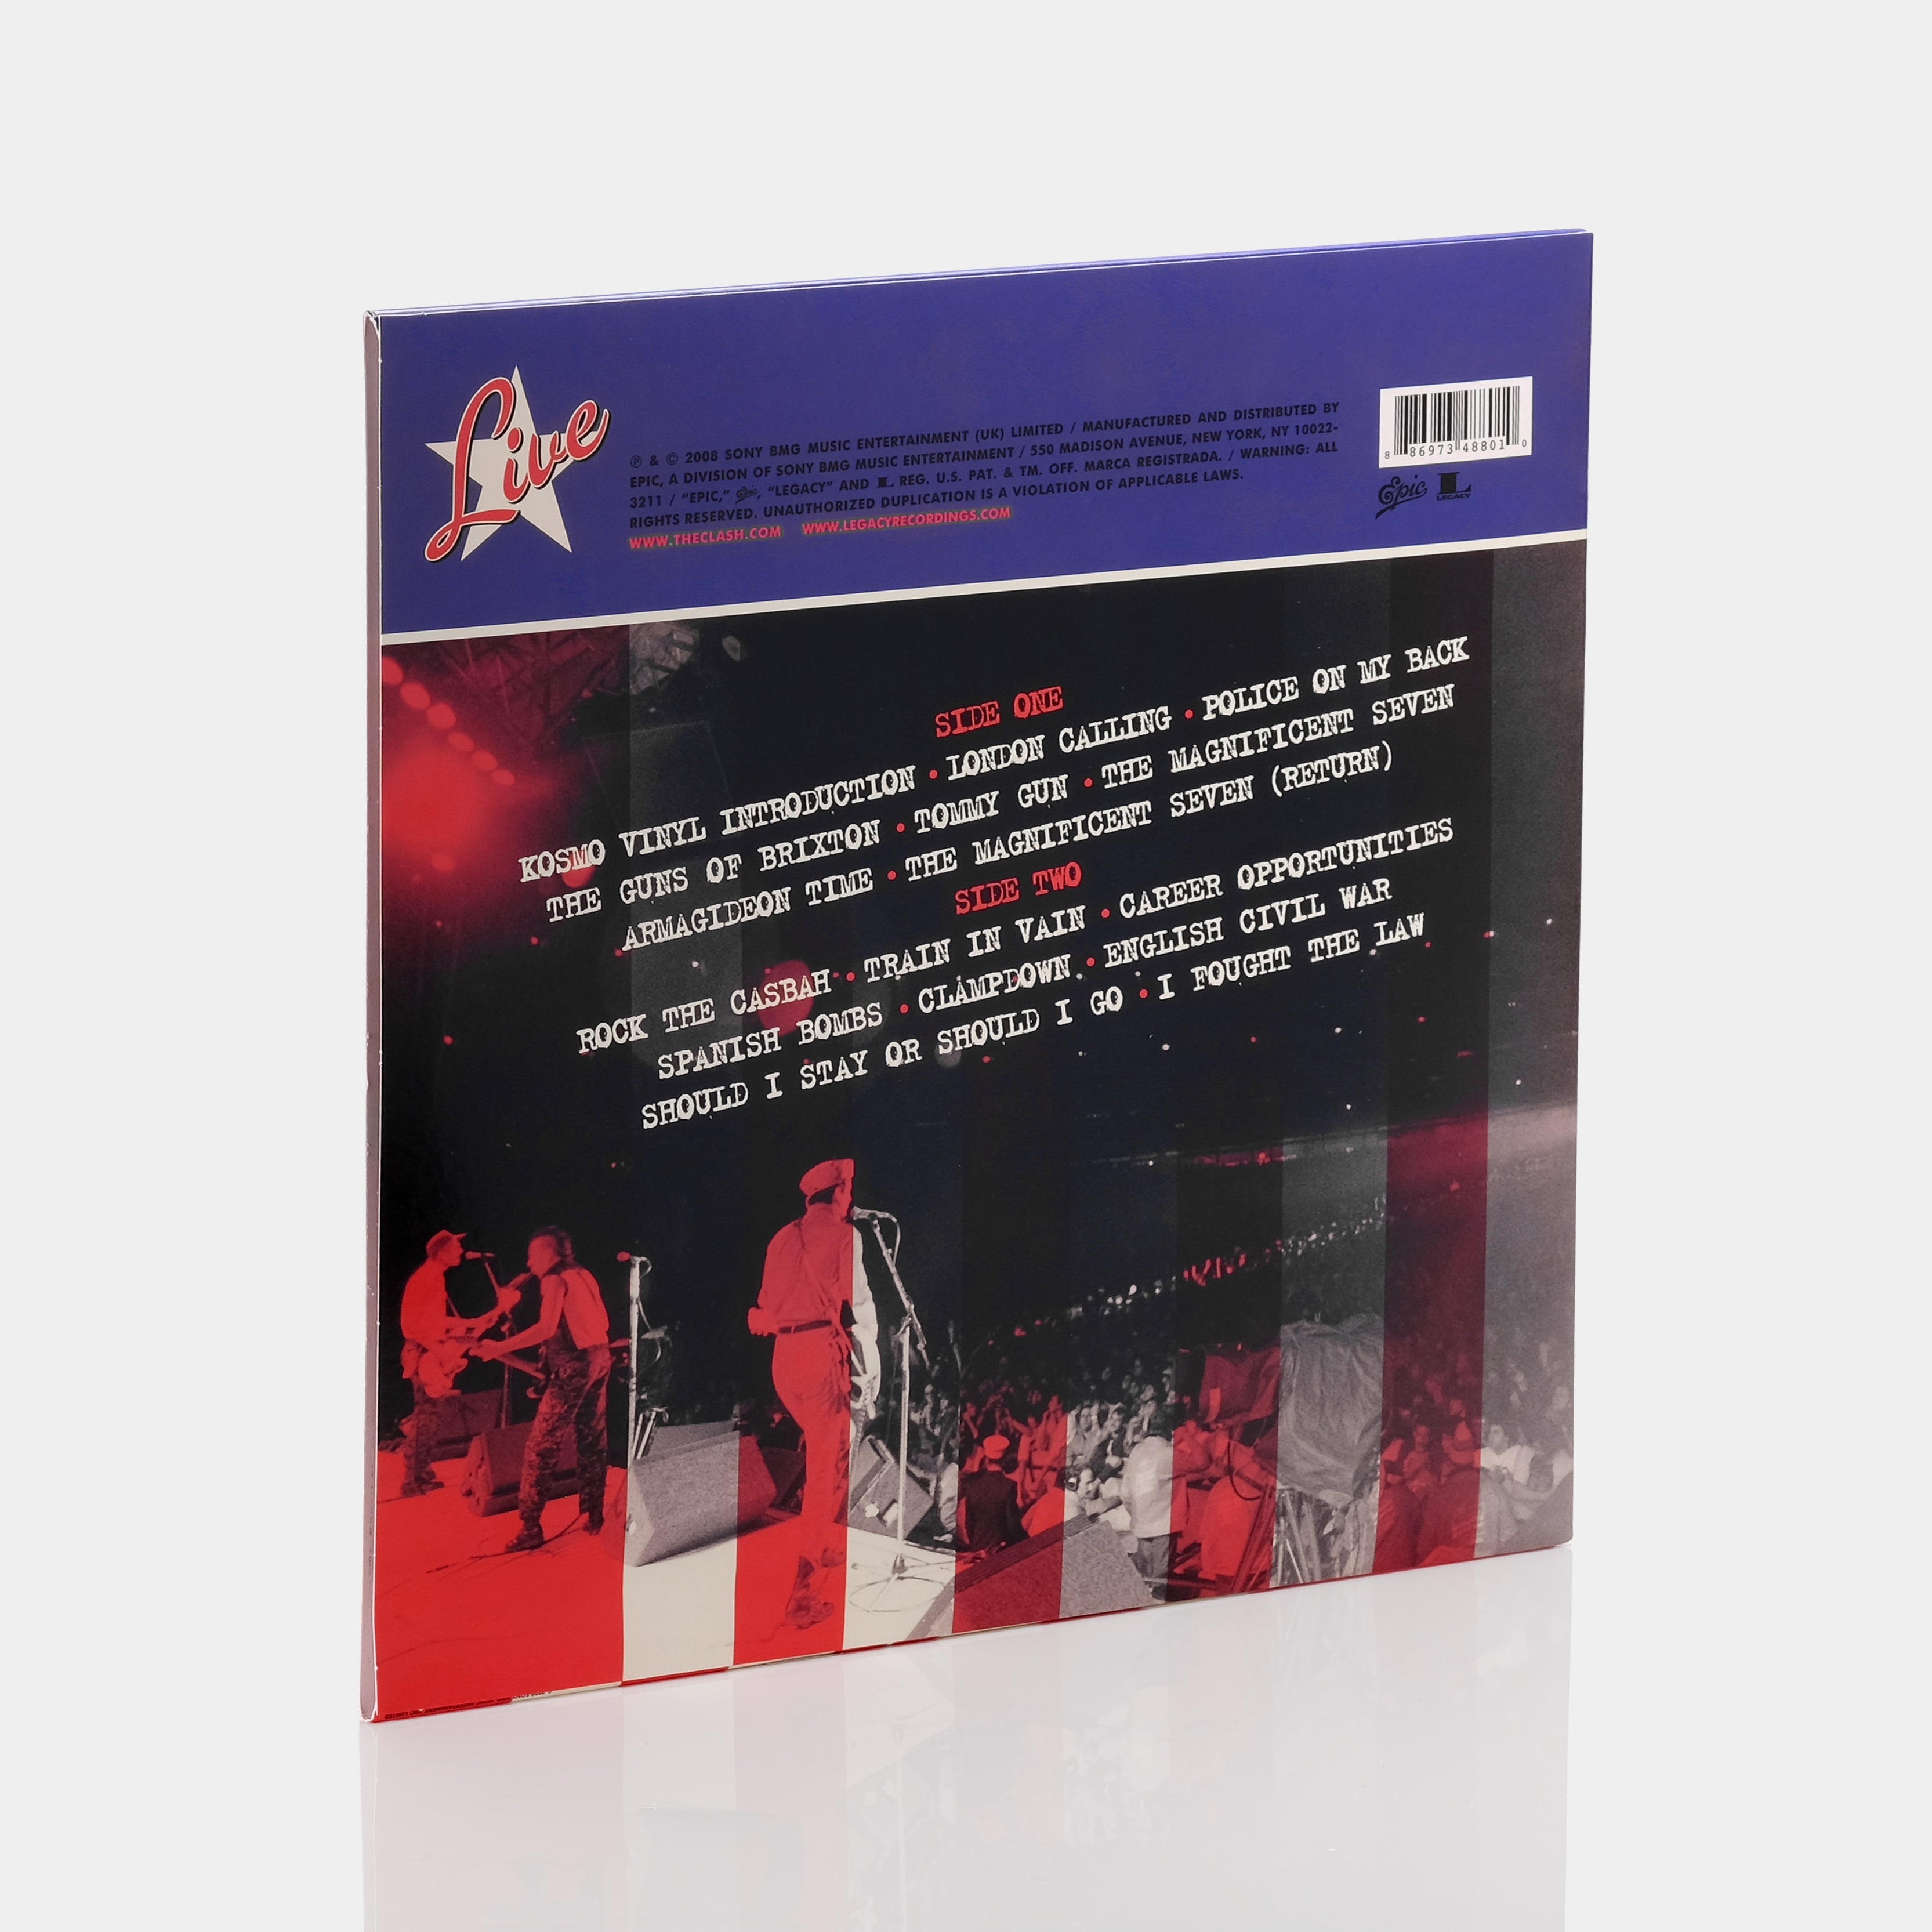 The Clash - Live At Shea Stadium LP Vinyl Record